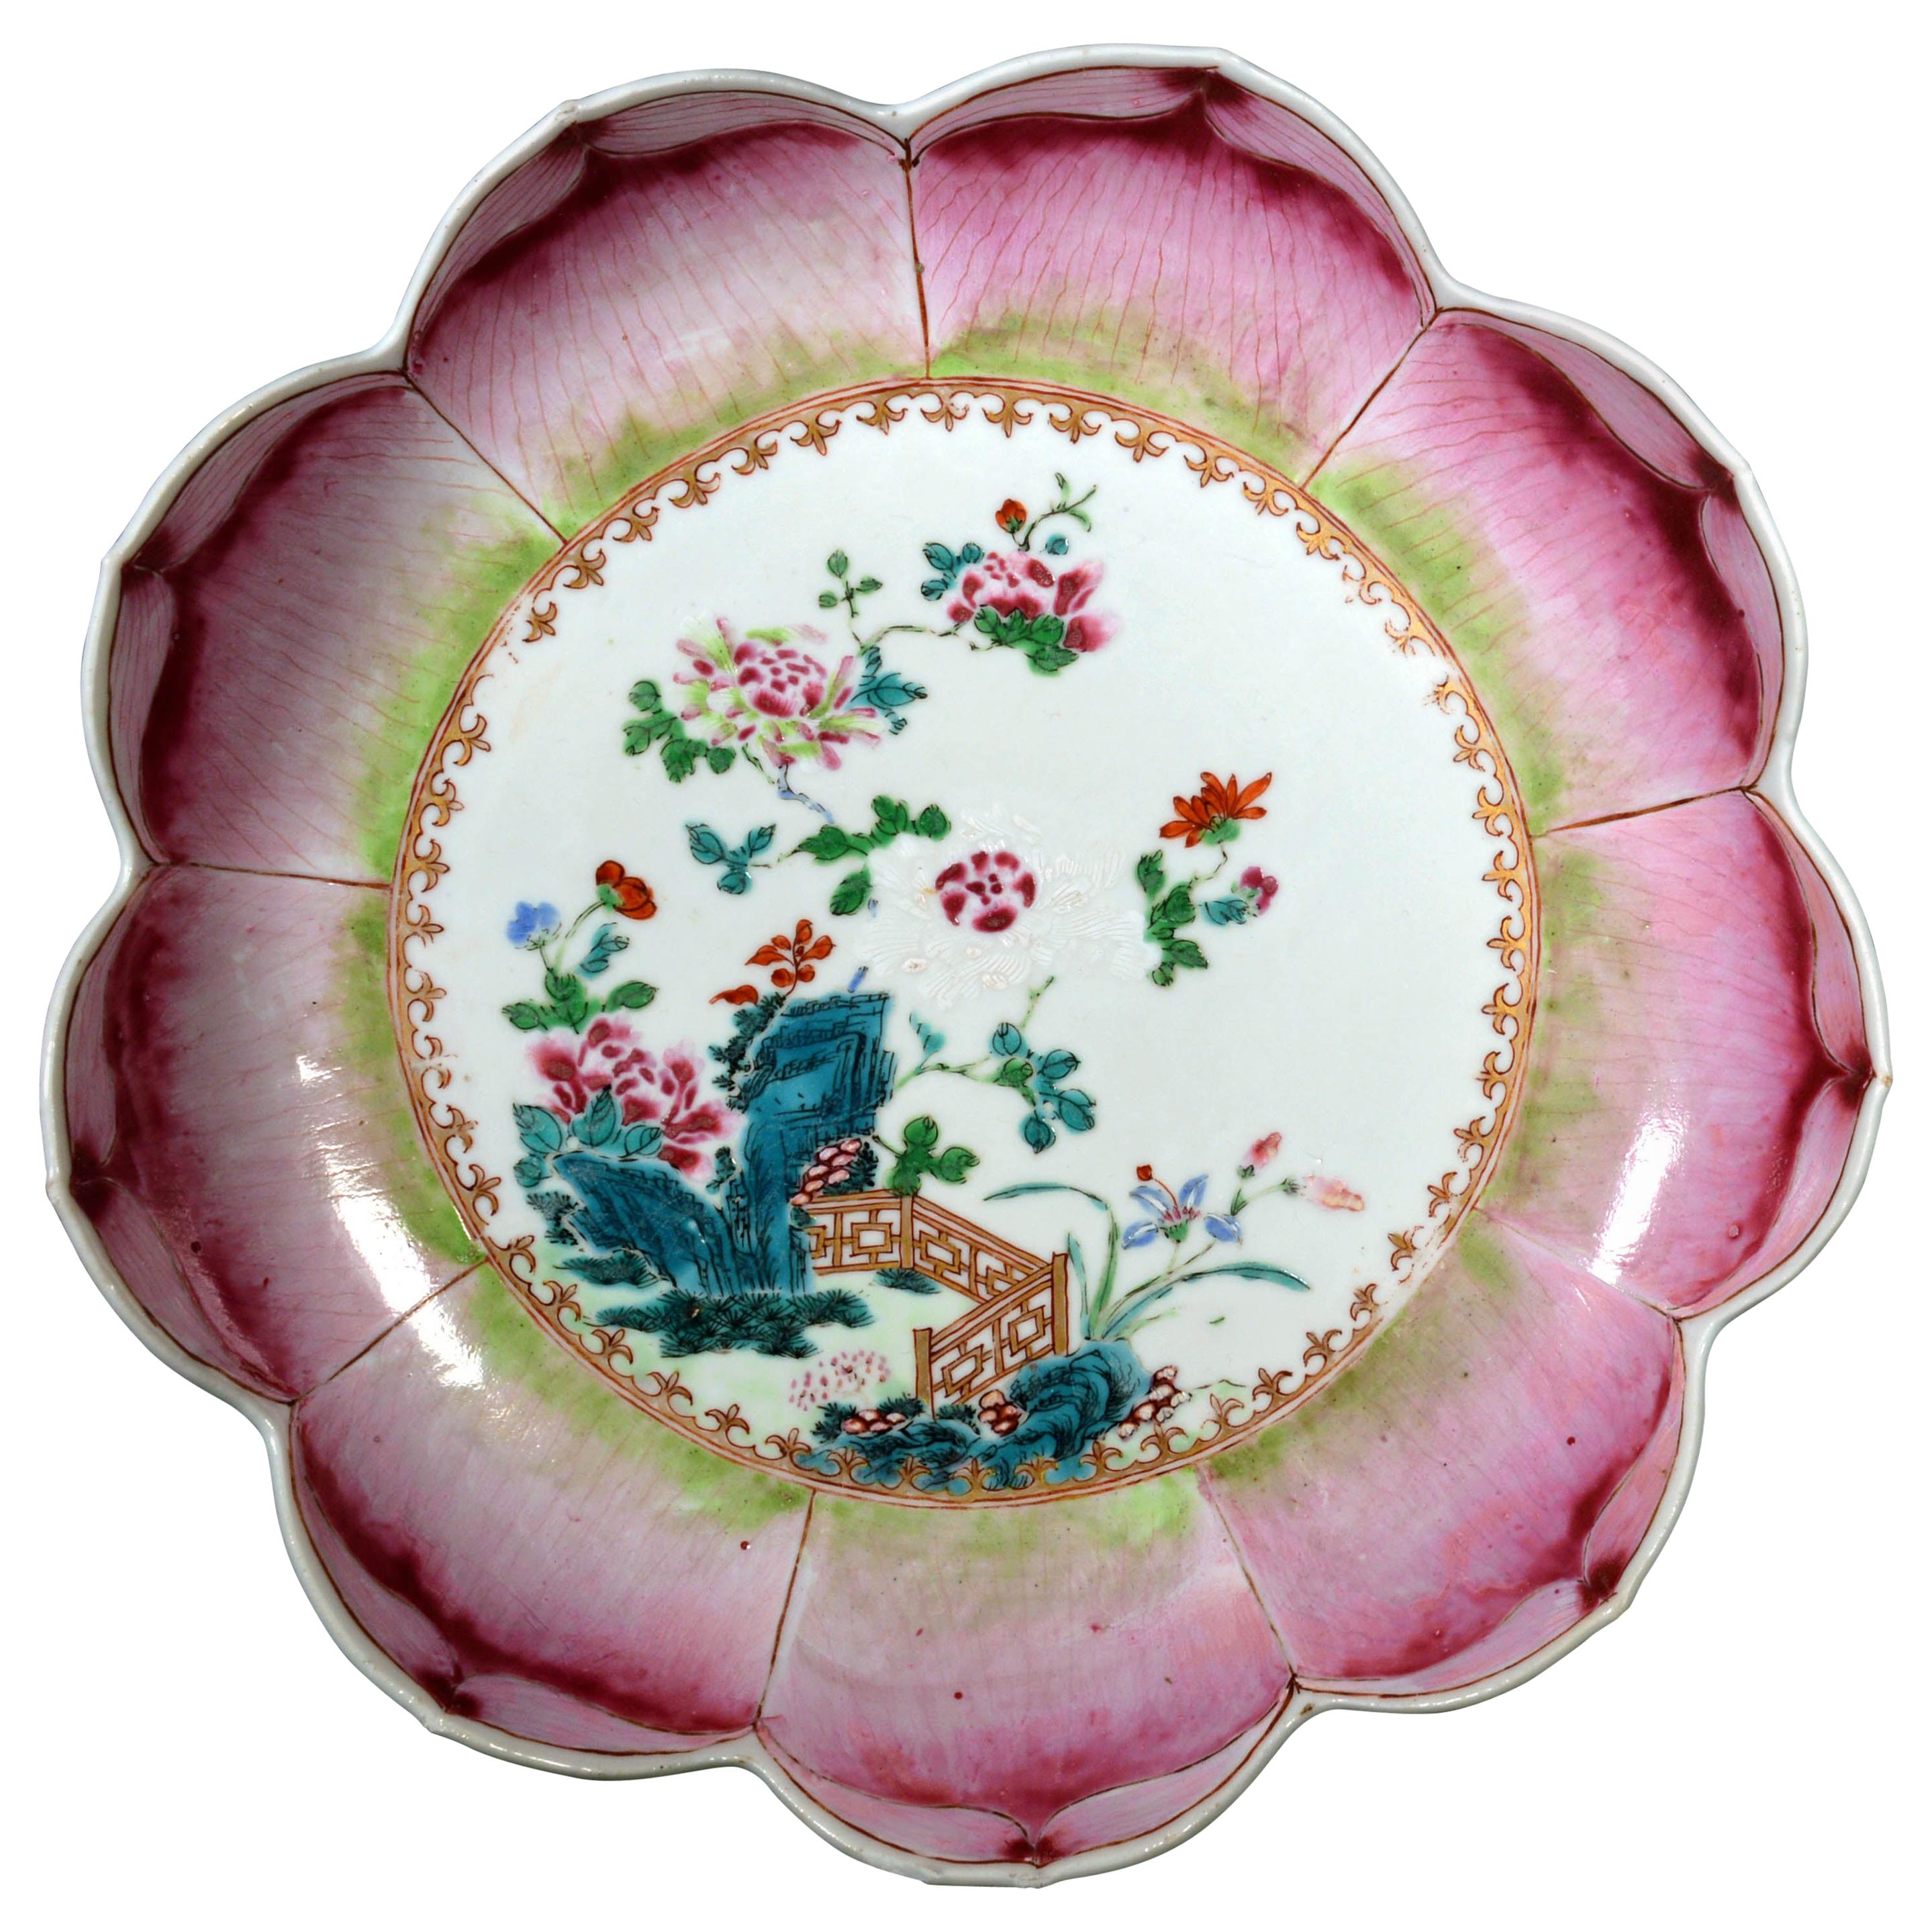 Chinese Export Porcelain Lotus Leaf Shaped Dish, circa 1765